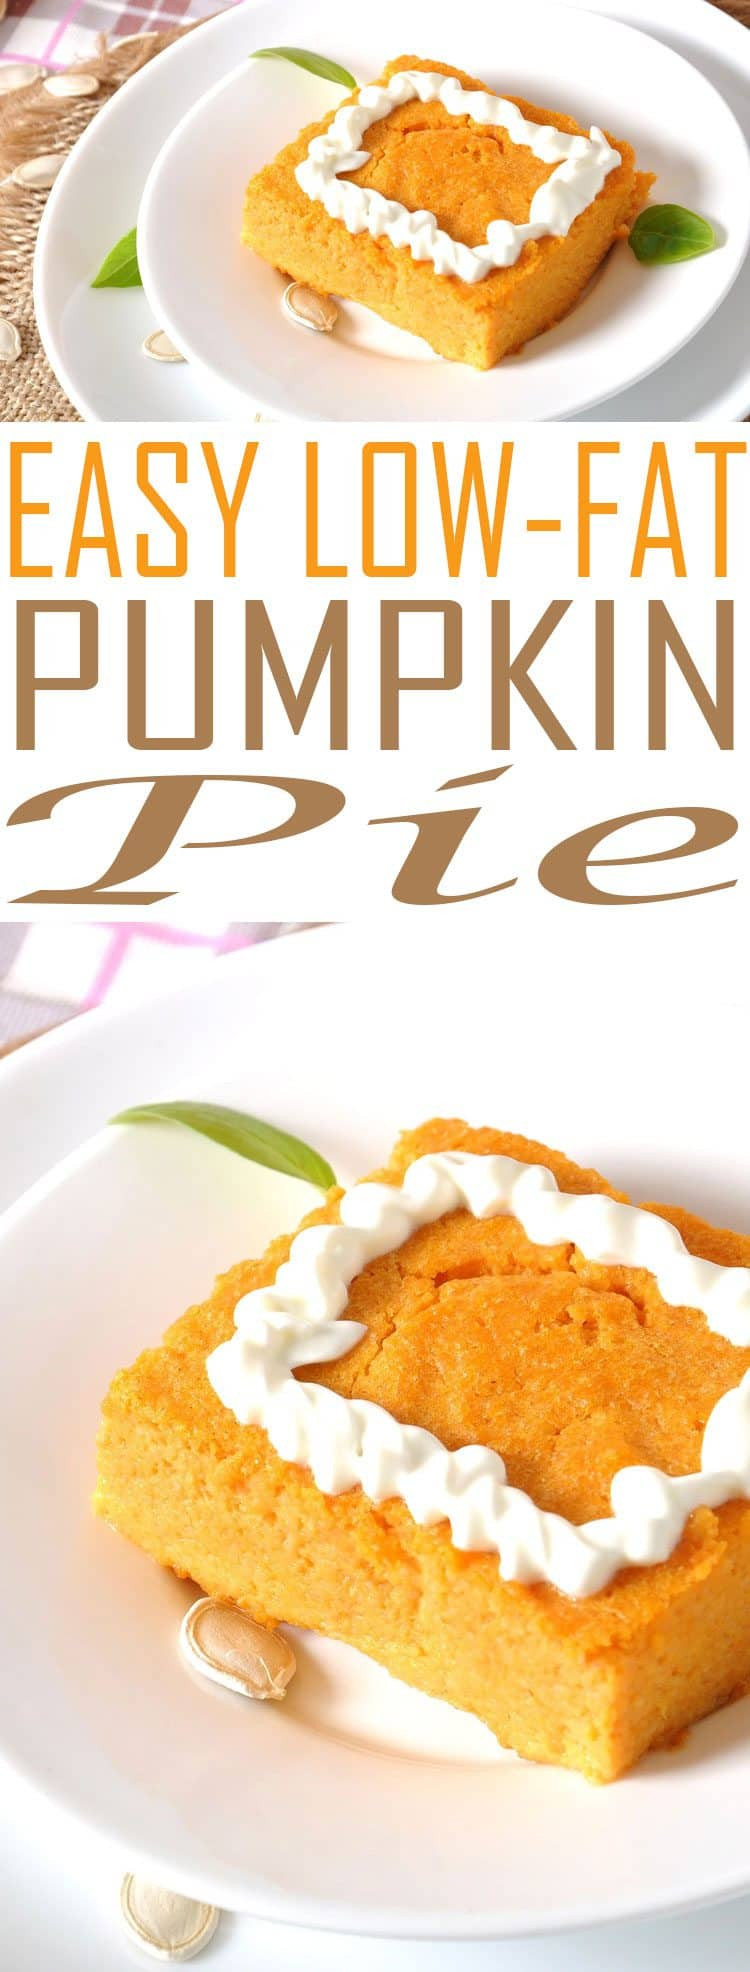 Easy Low Cholesterol Recipes
 Weight Watchers Pumpkin Pie Just 1 4 Smart Points Per